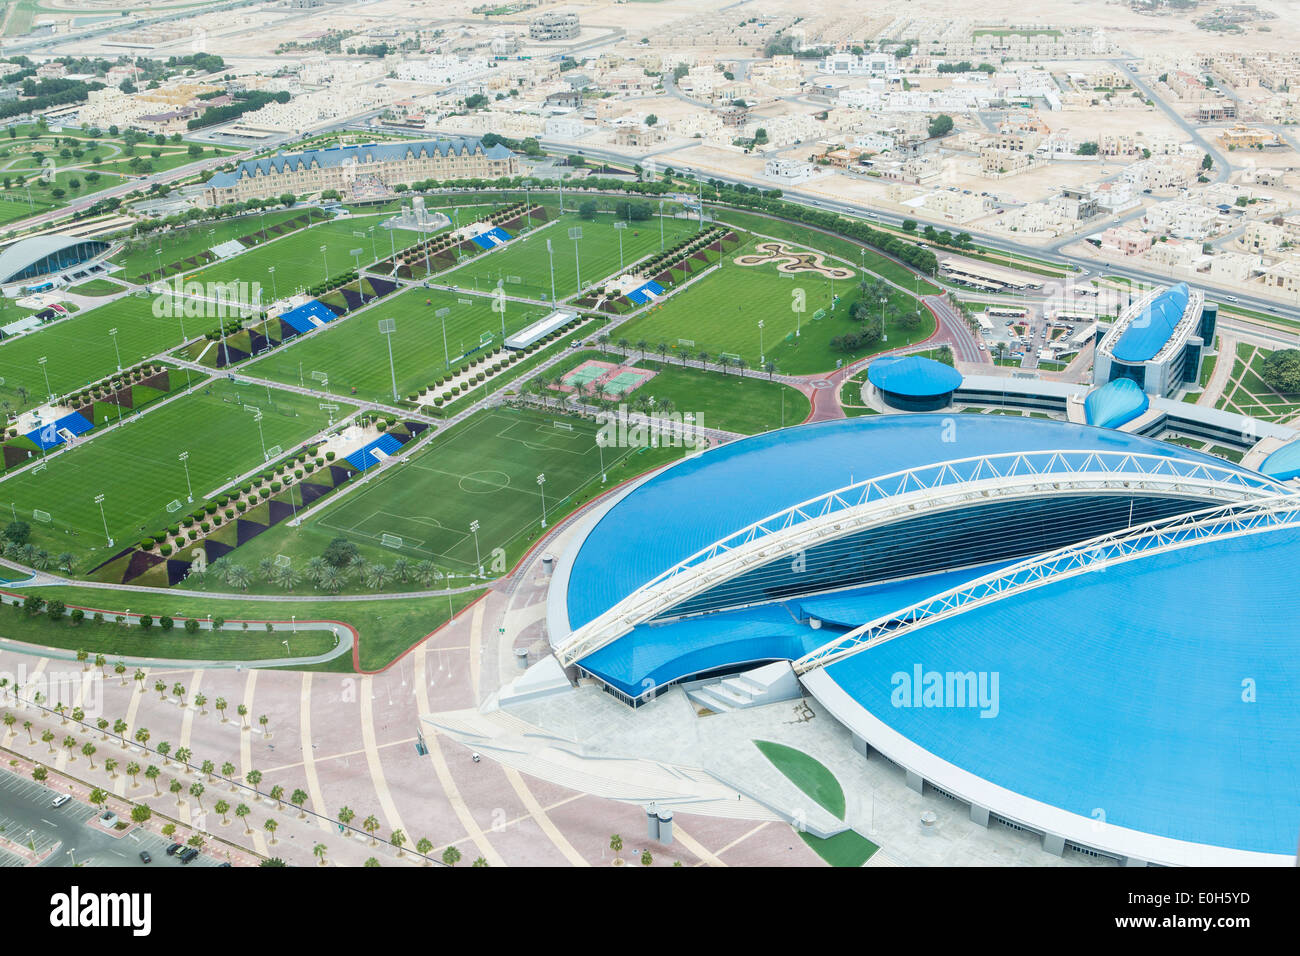 Qatar, Doha, Aspire Sports Center Stock Photo - Alamy